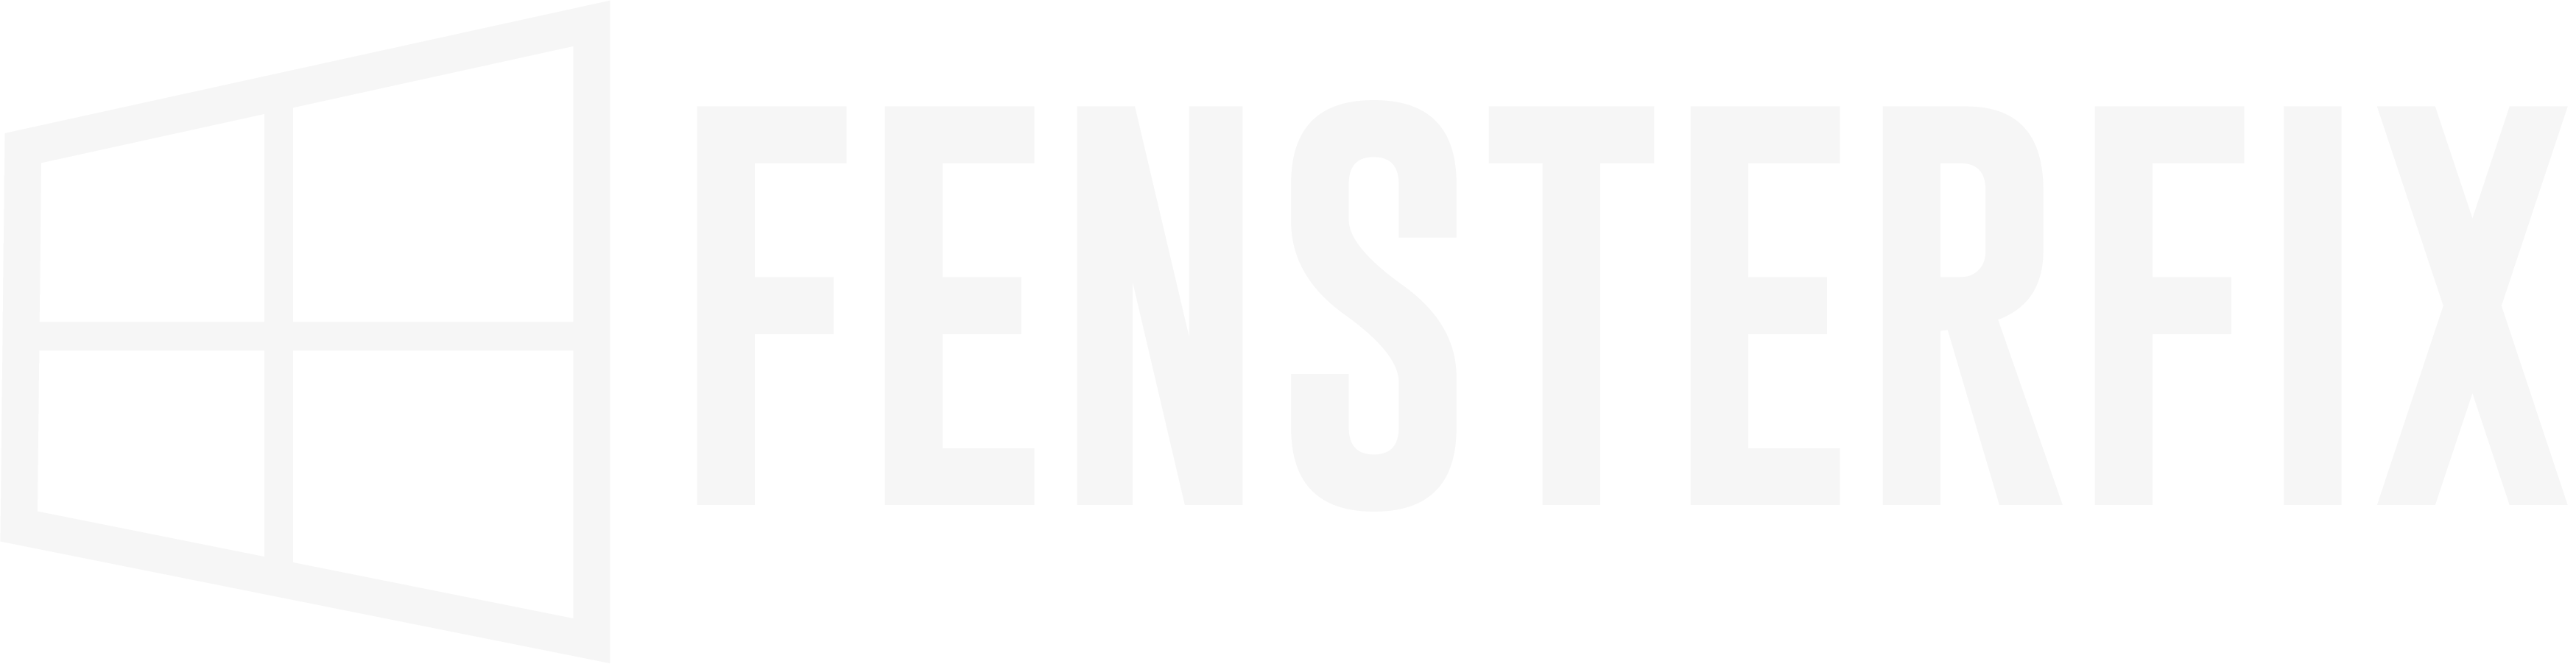 fensterfix-logo